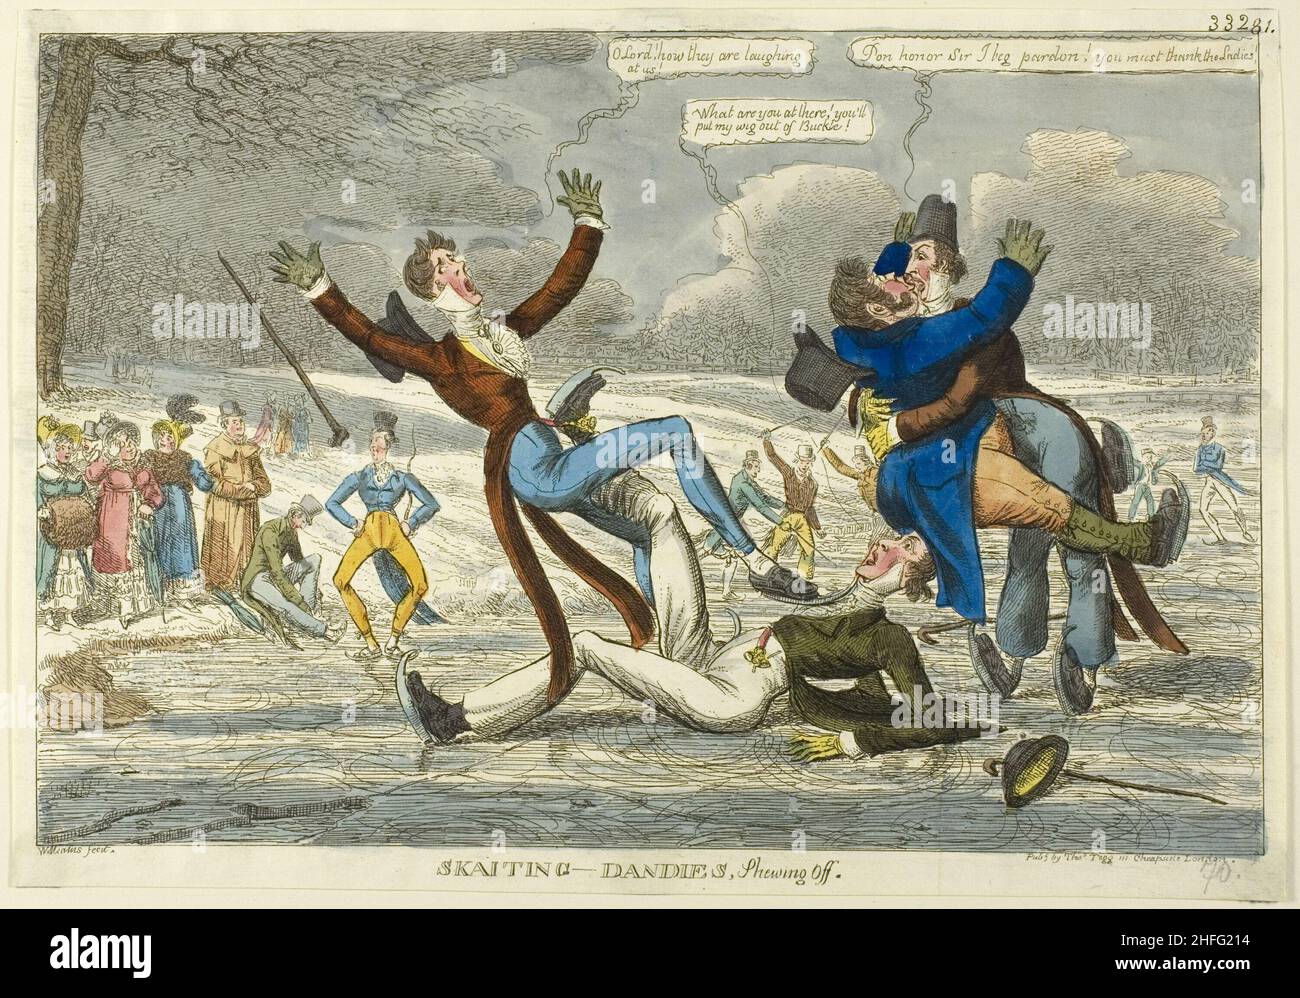 Skaiting Dandies, shewing off, c. 1818. Stock Photo